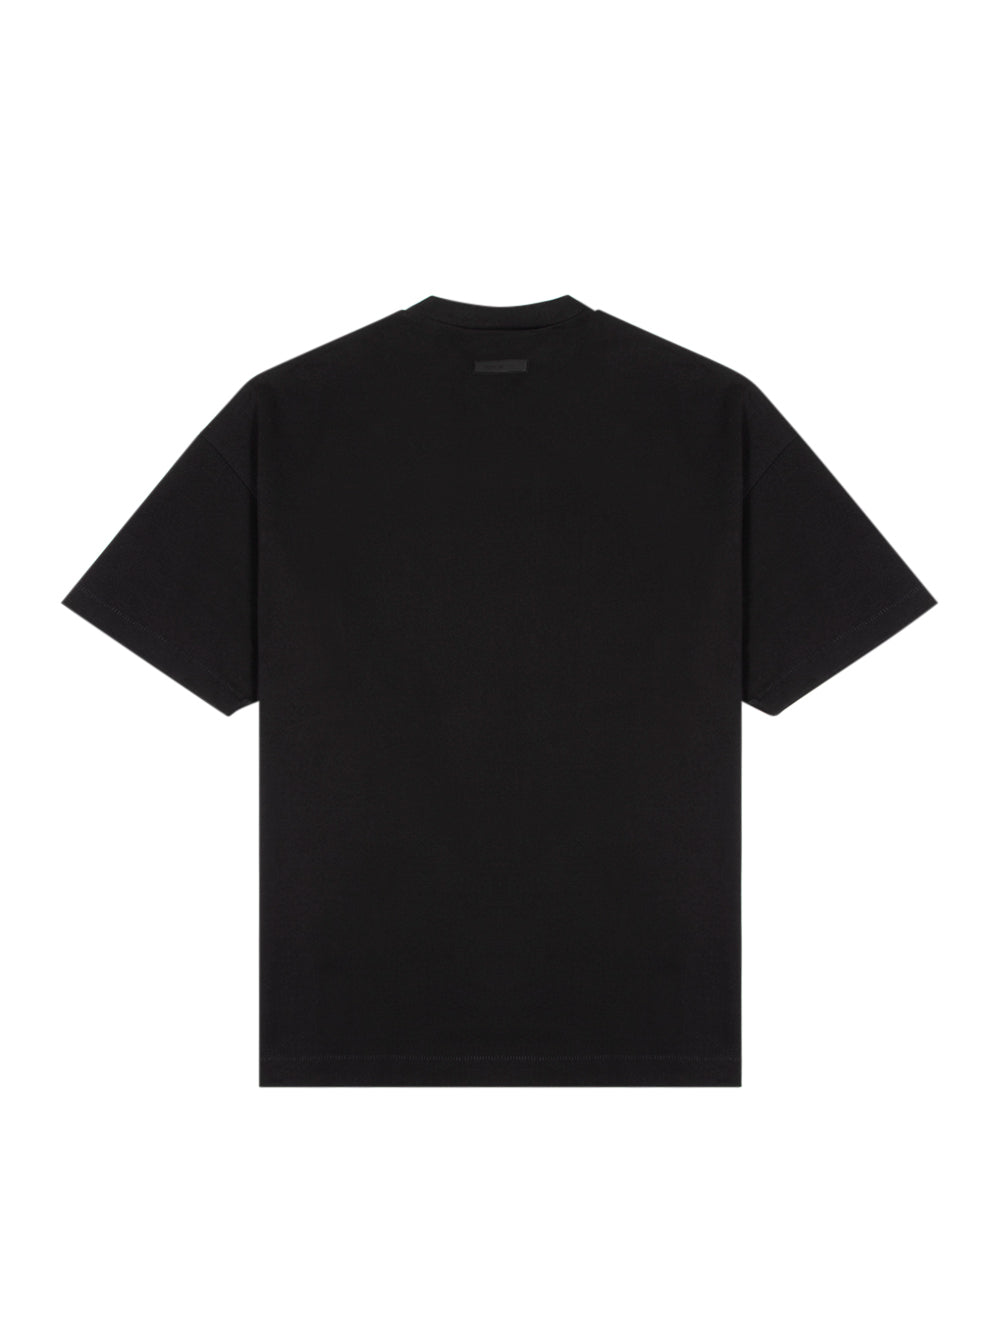 Crewneck T-Shirt (Jet Black)